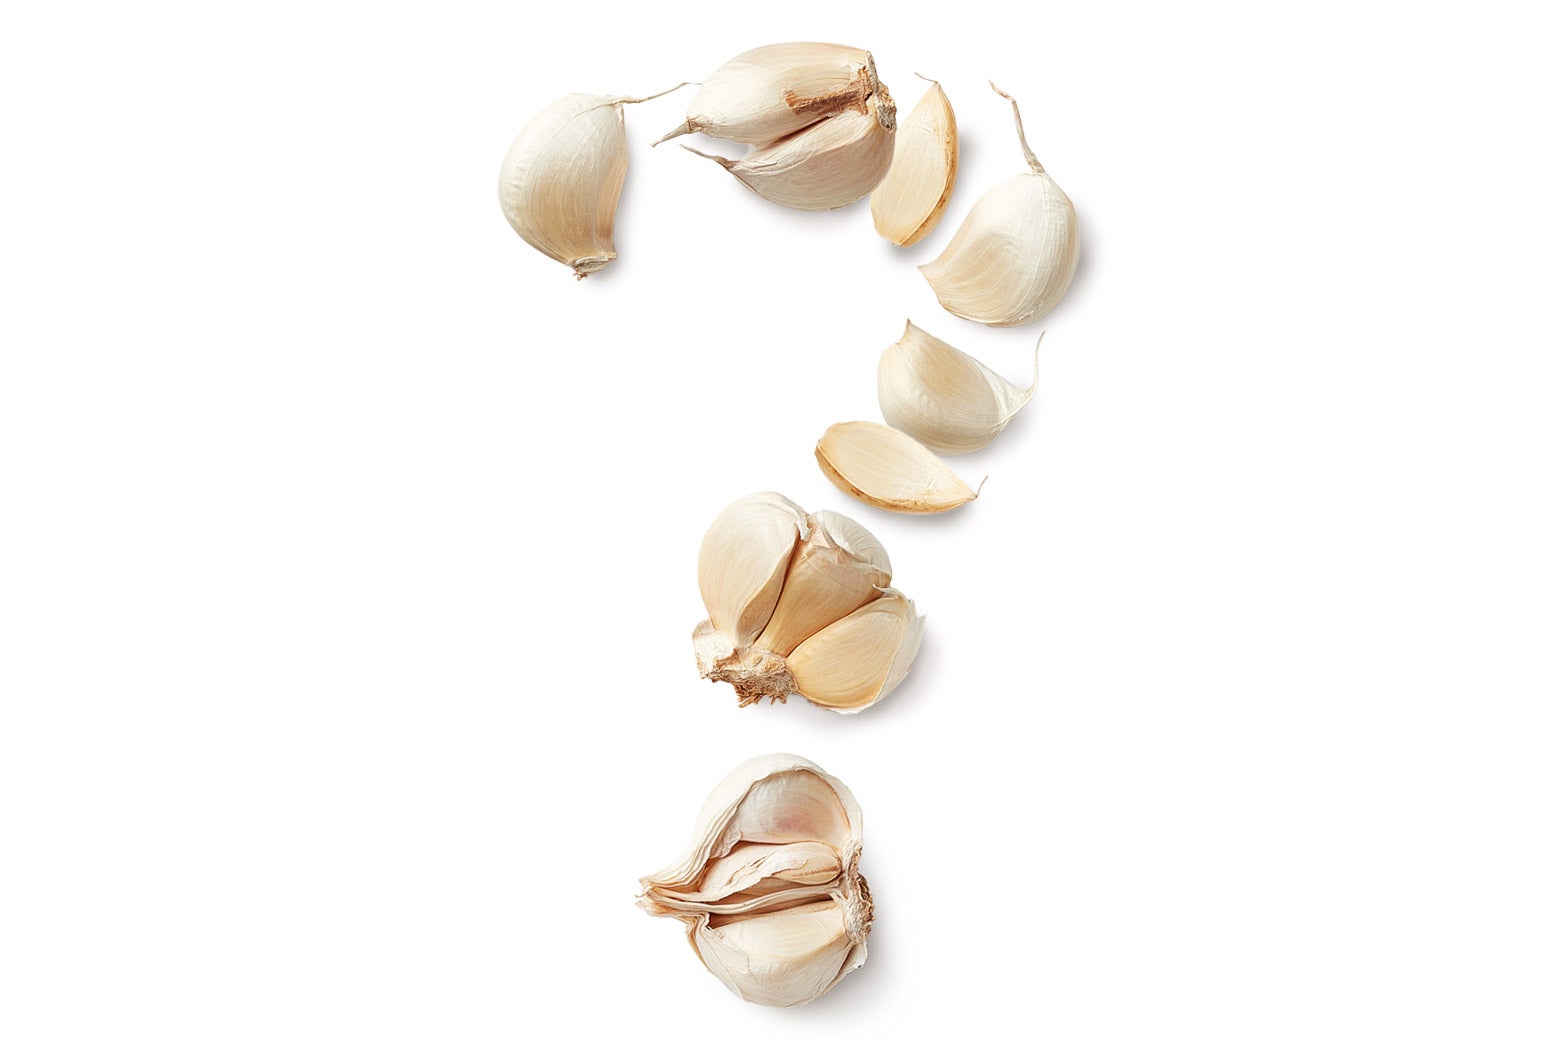 Garlic cloves arranged to form a question mark.